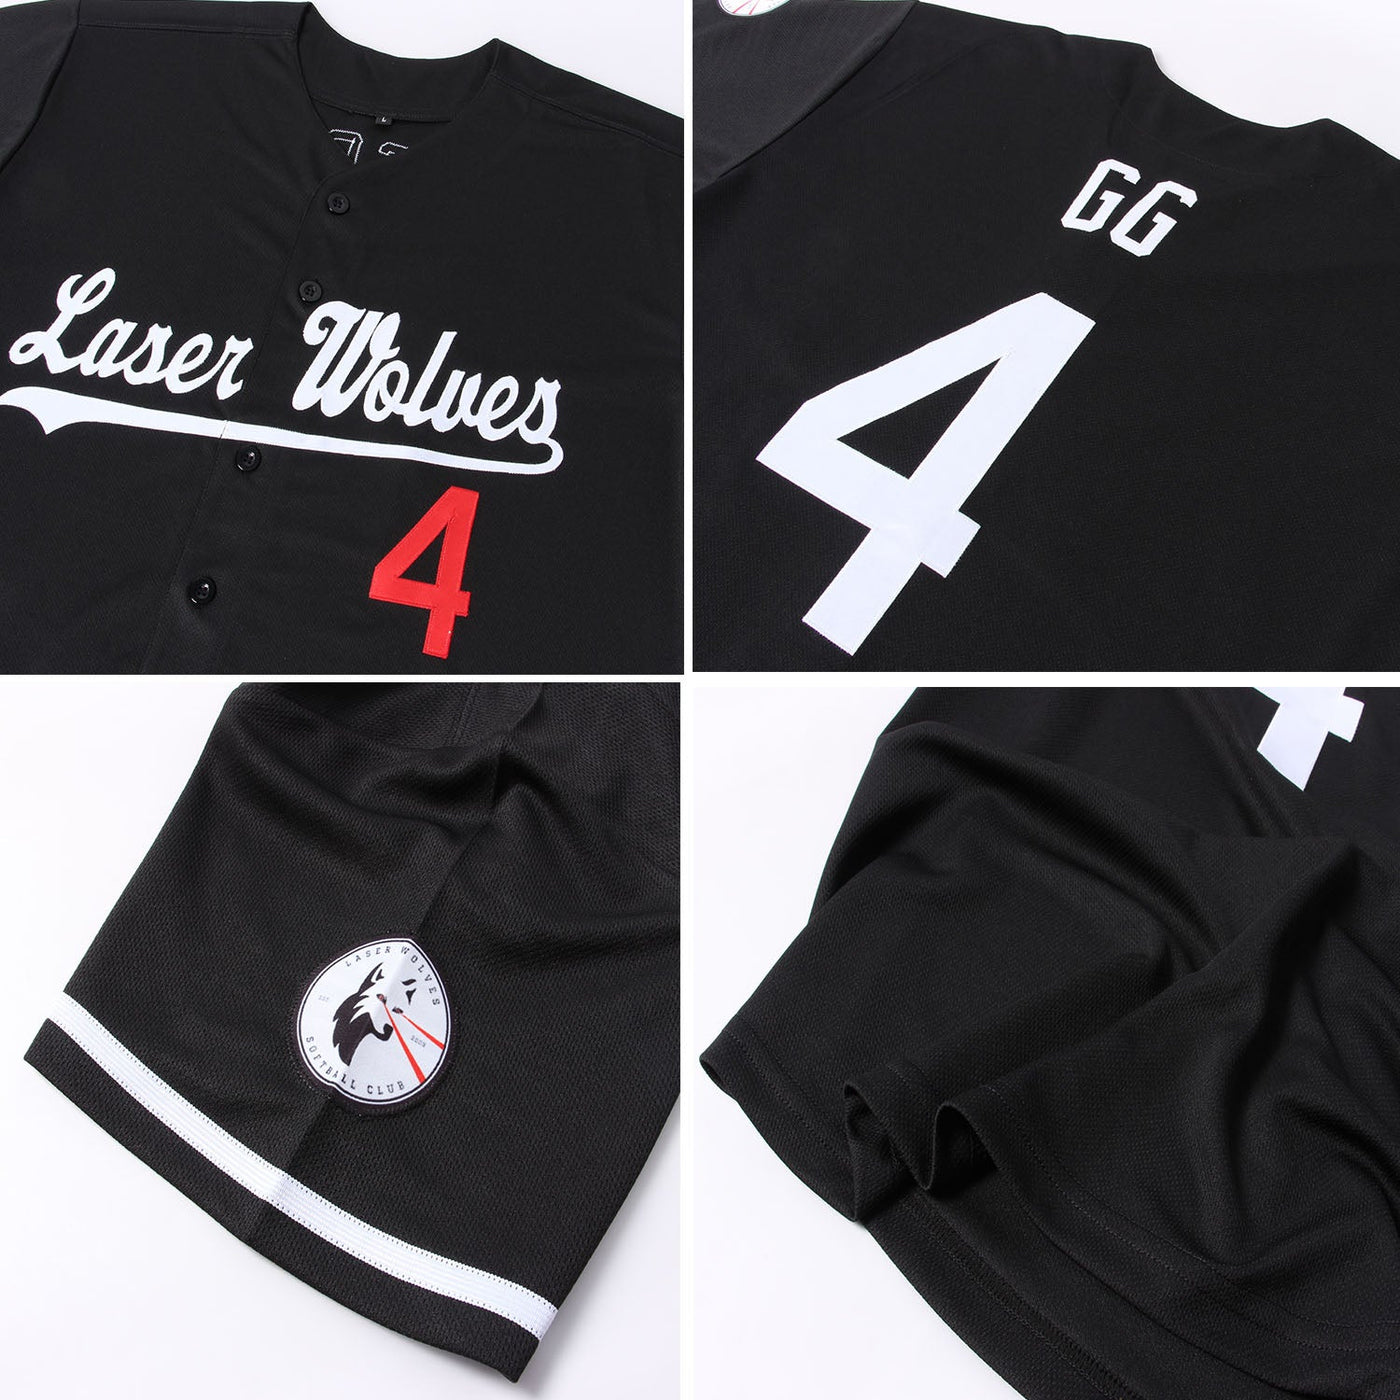 Custom Black White-Red Authentic Baseball Jersey - Owls Matrix LTD